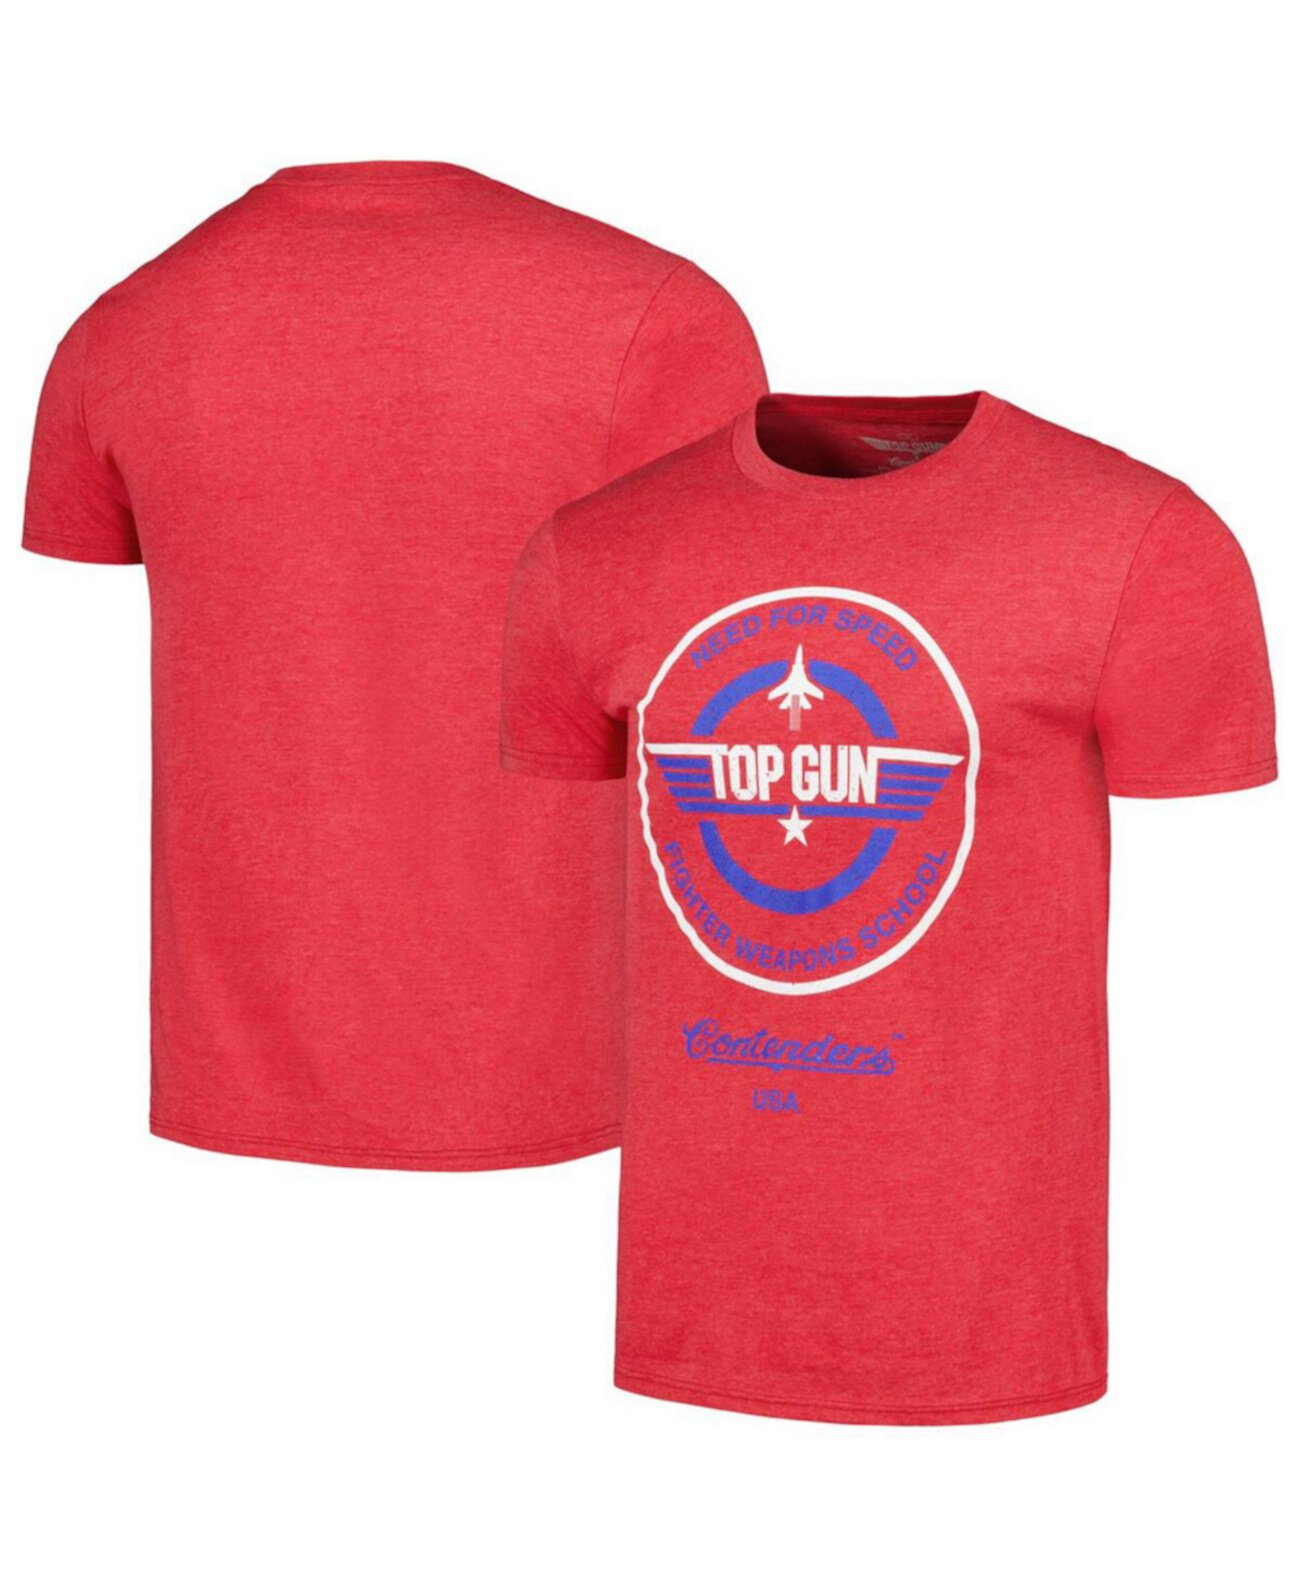 Men's Heather Red Top Gun Crest T-shirt Contenders Clothing